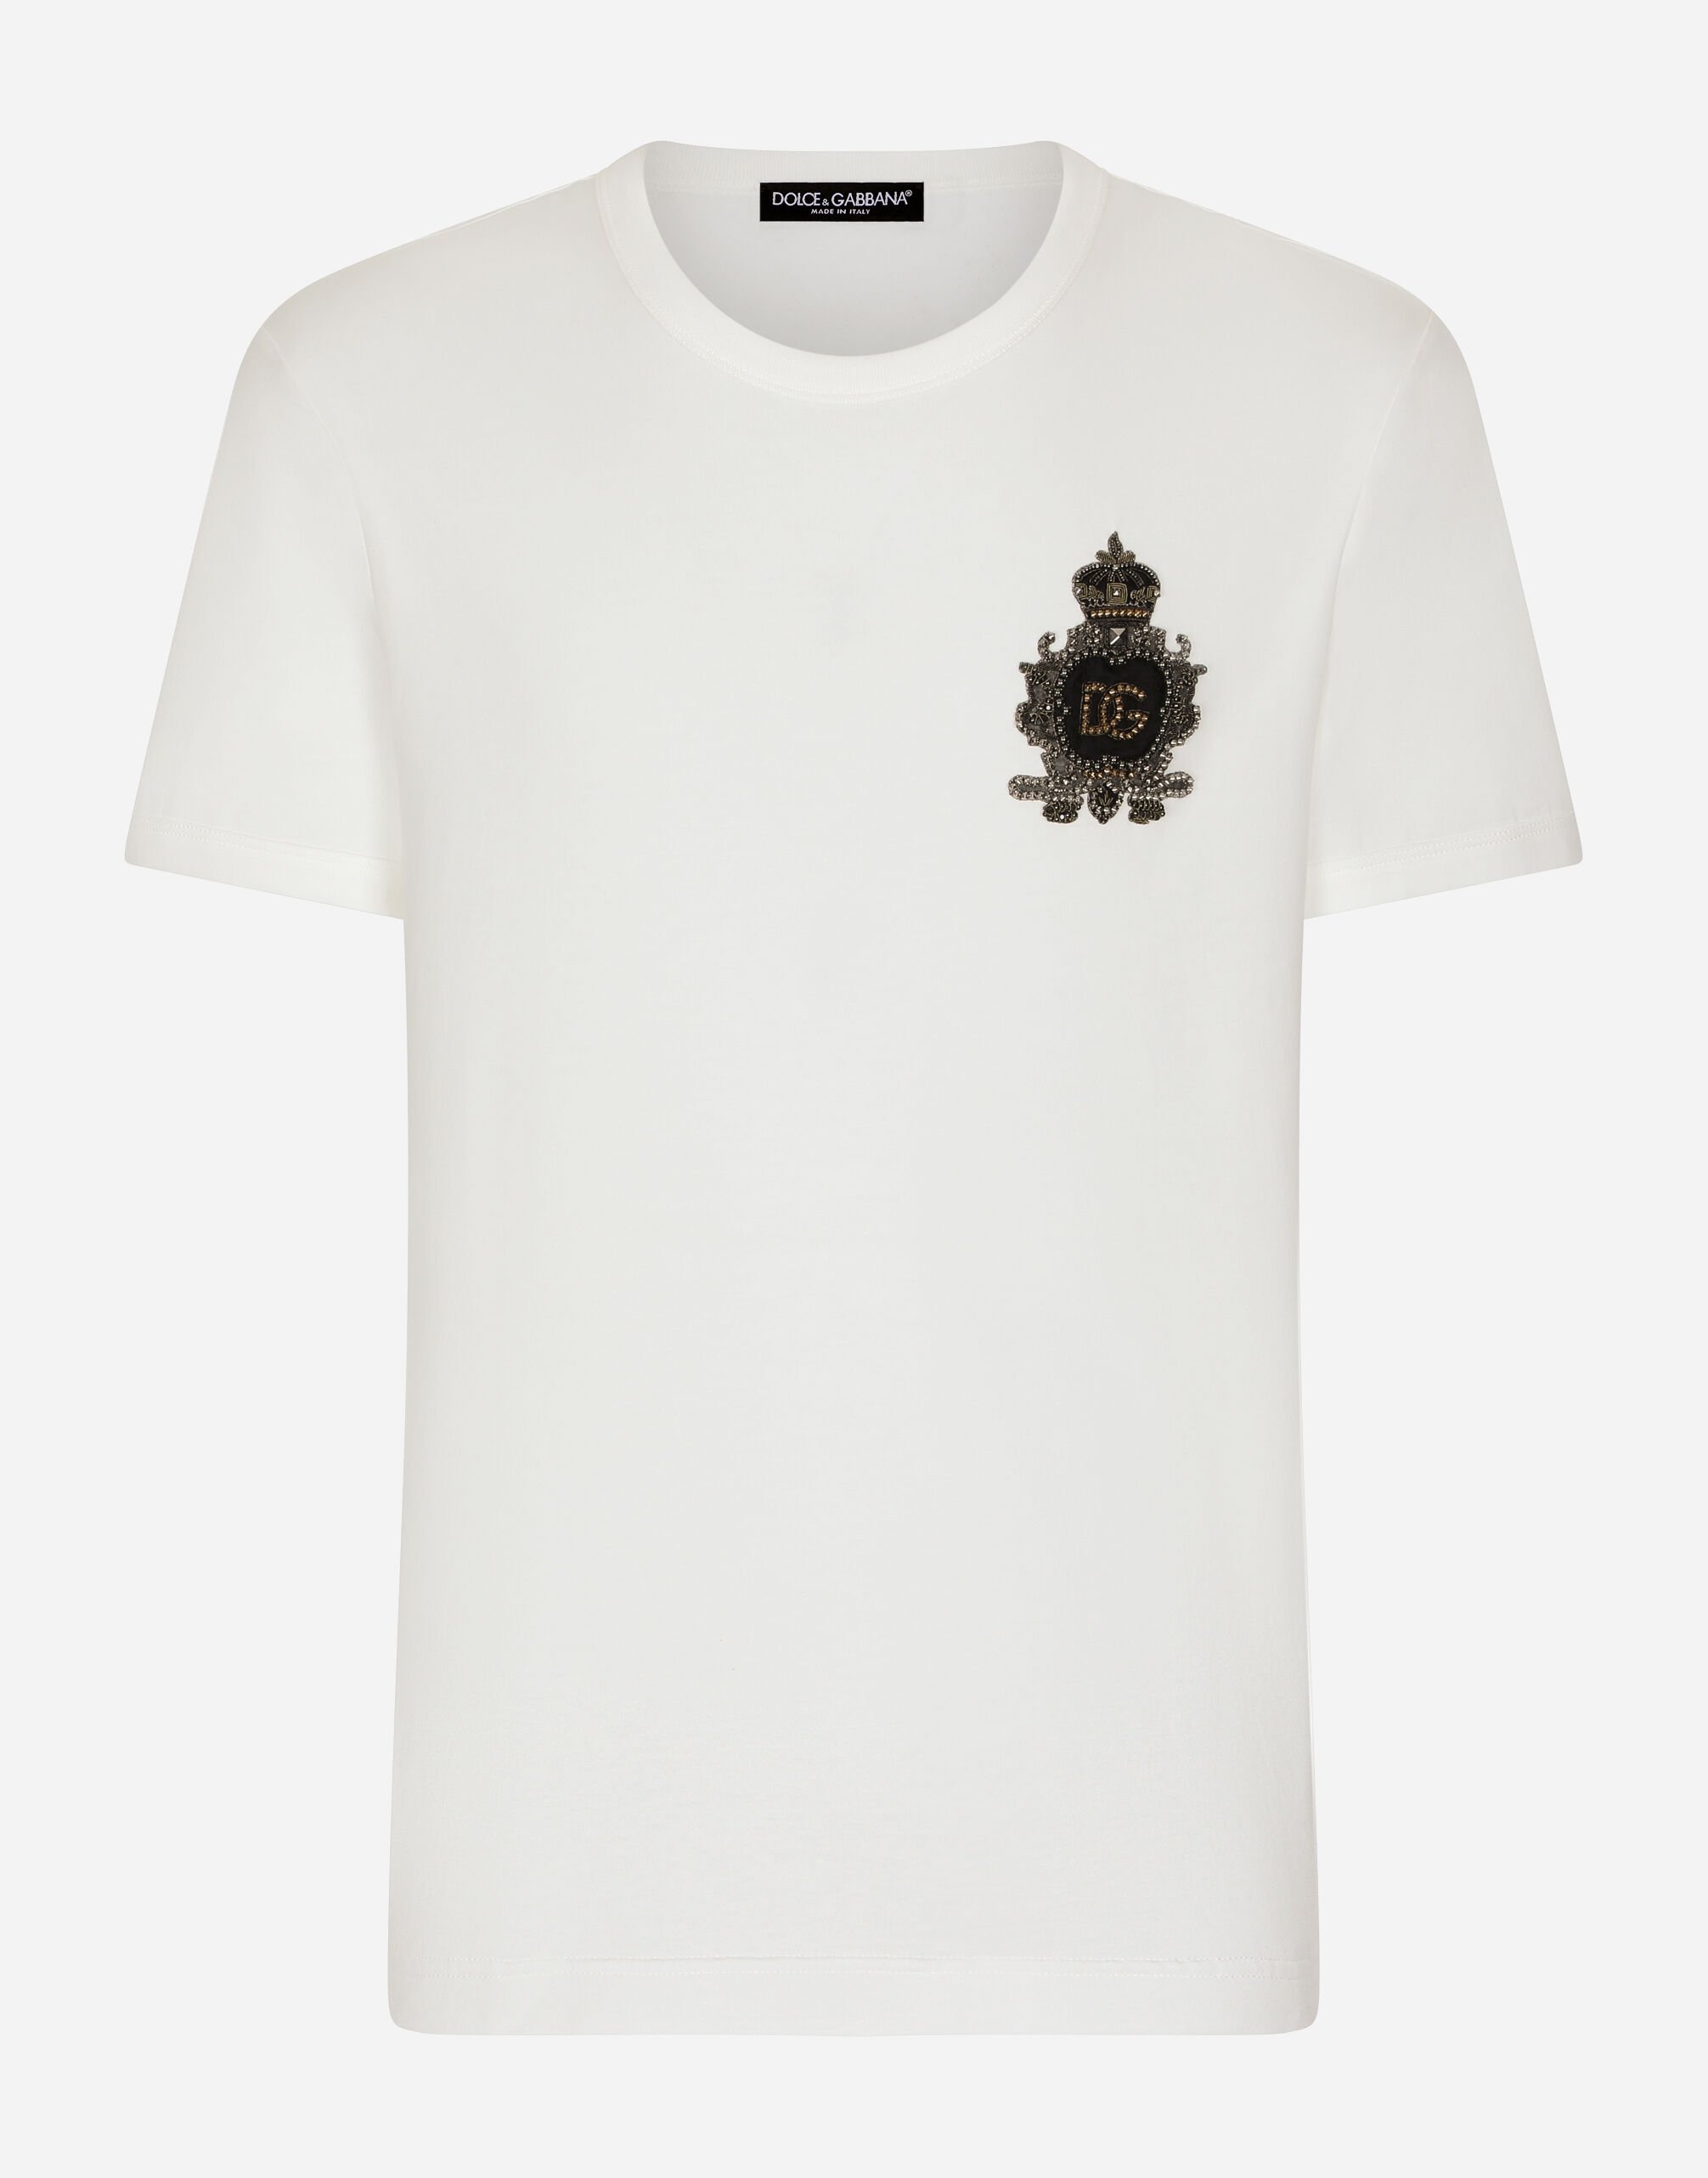 Dolce&Gabbana Cotton T-shirt with heraldic DG logo patch Brown G9AKKLHULS1